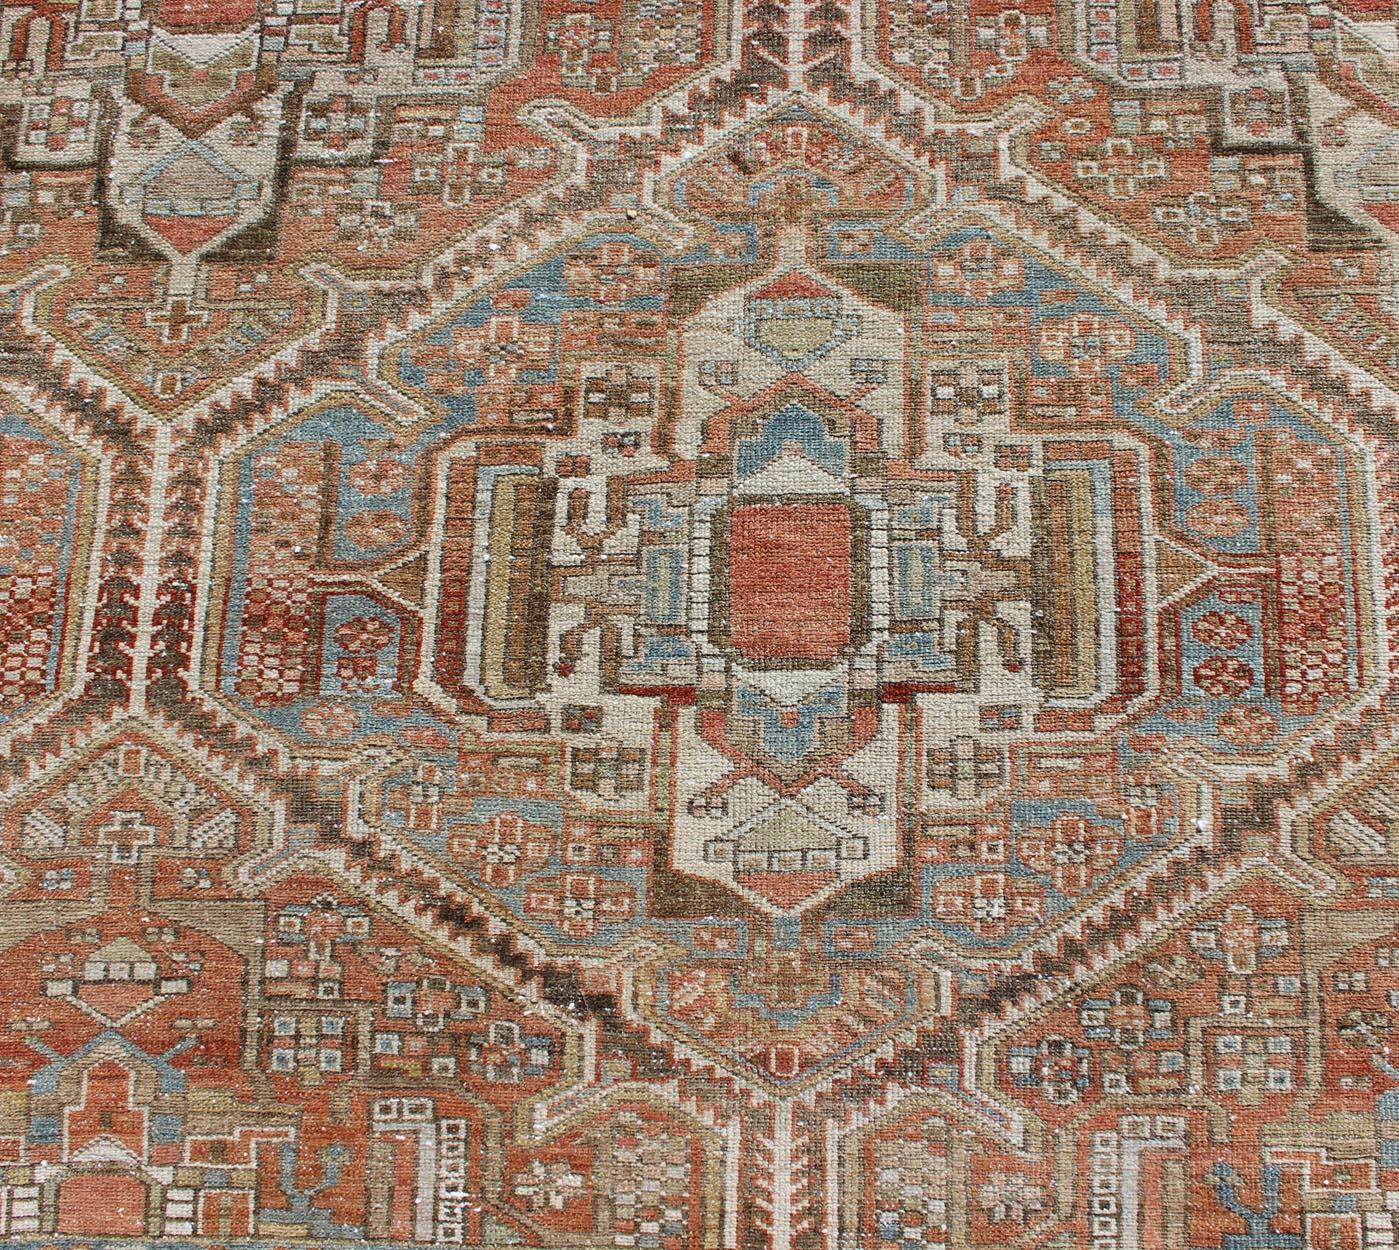 Large Antique Persian Over Sized Diamond Design Bakhtiari Rug in Multi Colors For Sale 5